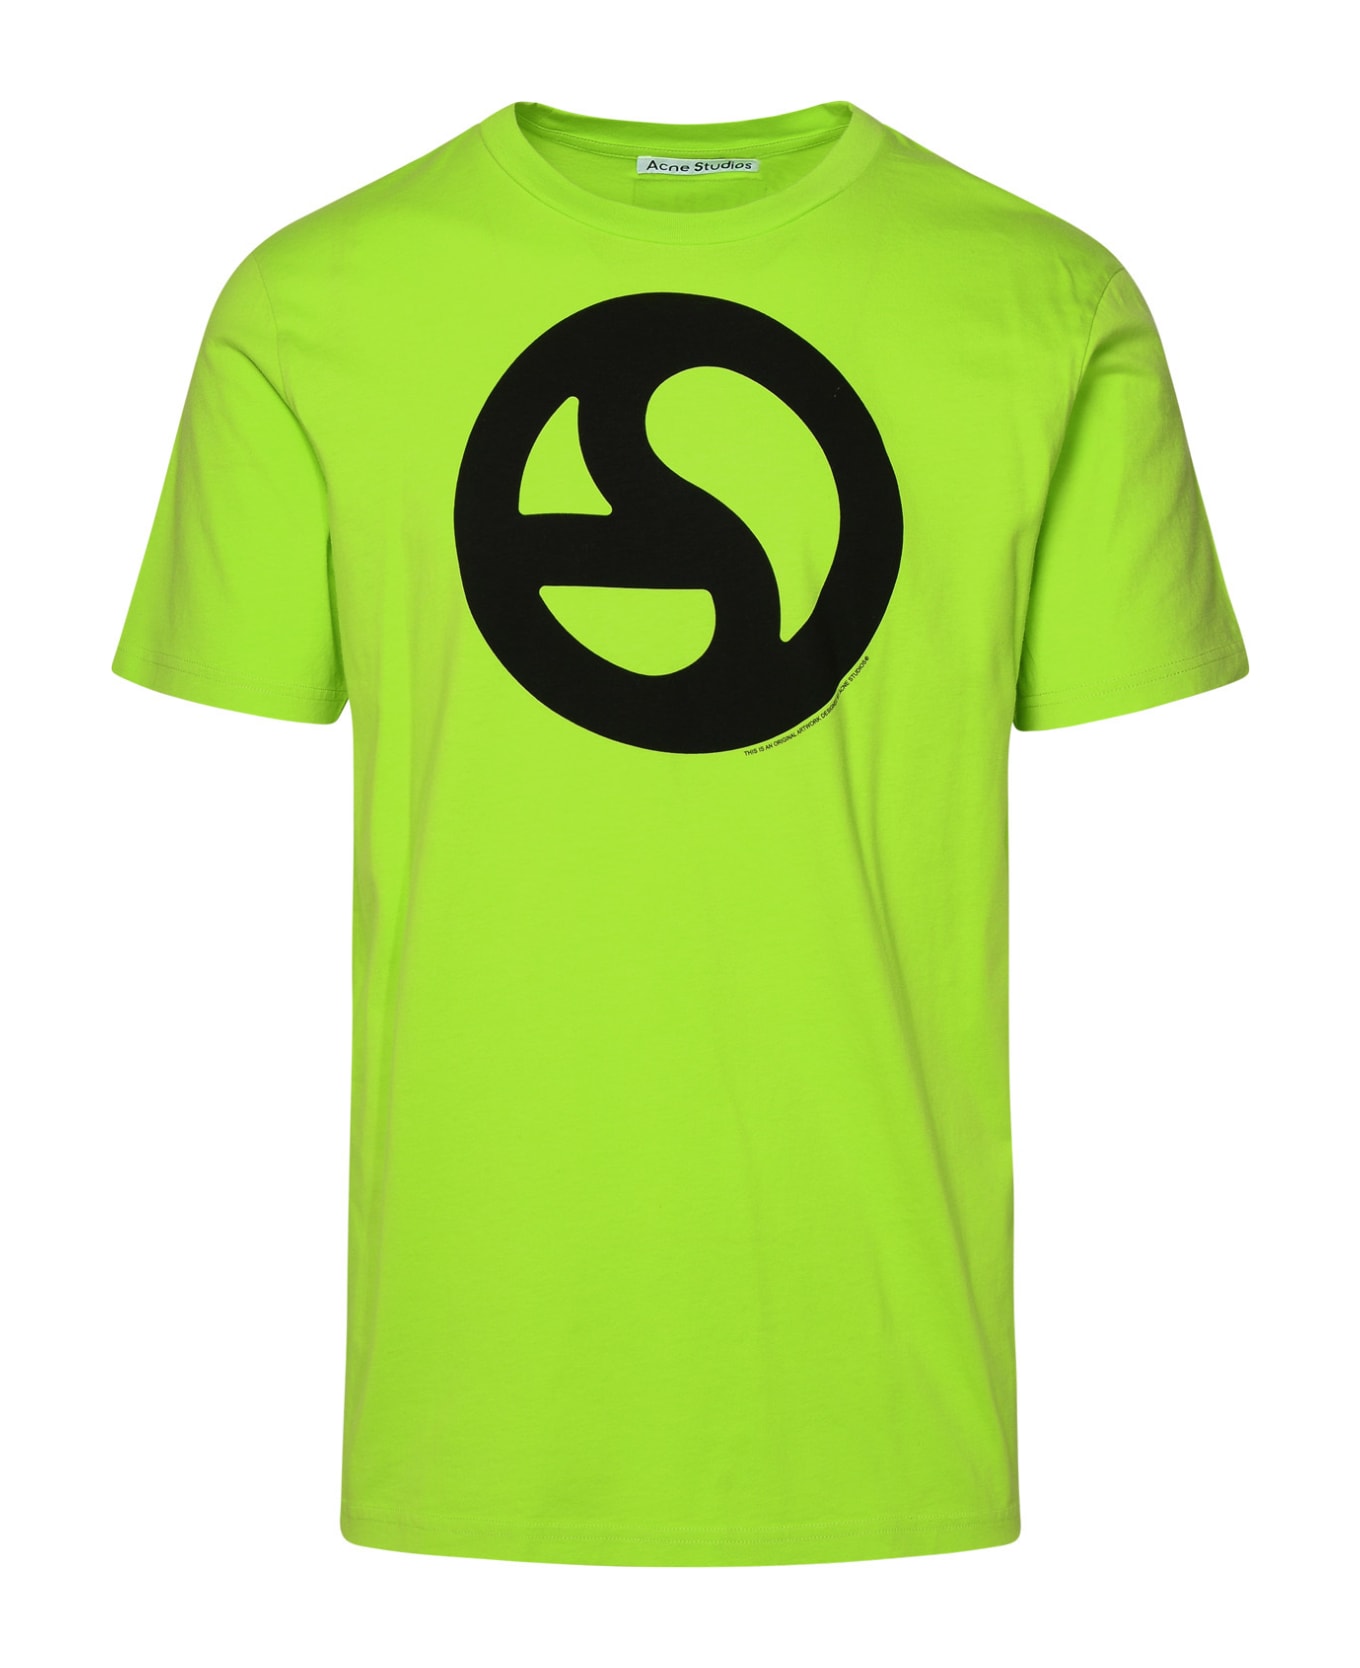 Acne Studios Green Cotton T-shirt - Green